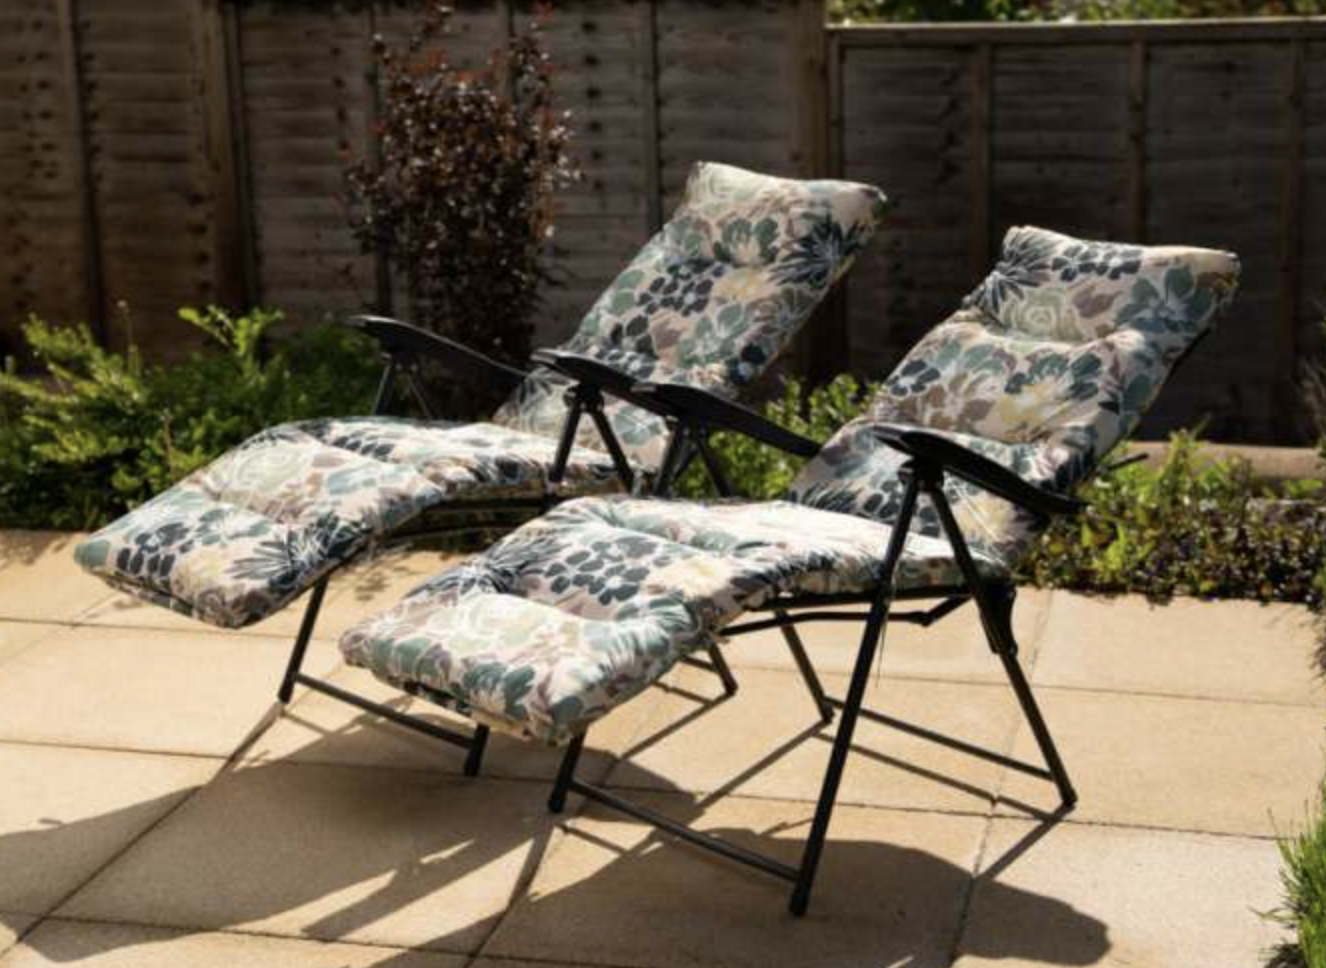 SET OF 2 Brown Garden Sun Lounger Relaxer Recliner Garden Chairs Weatherproof Textoline Folding And Multi Position With A Headrest